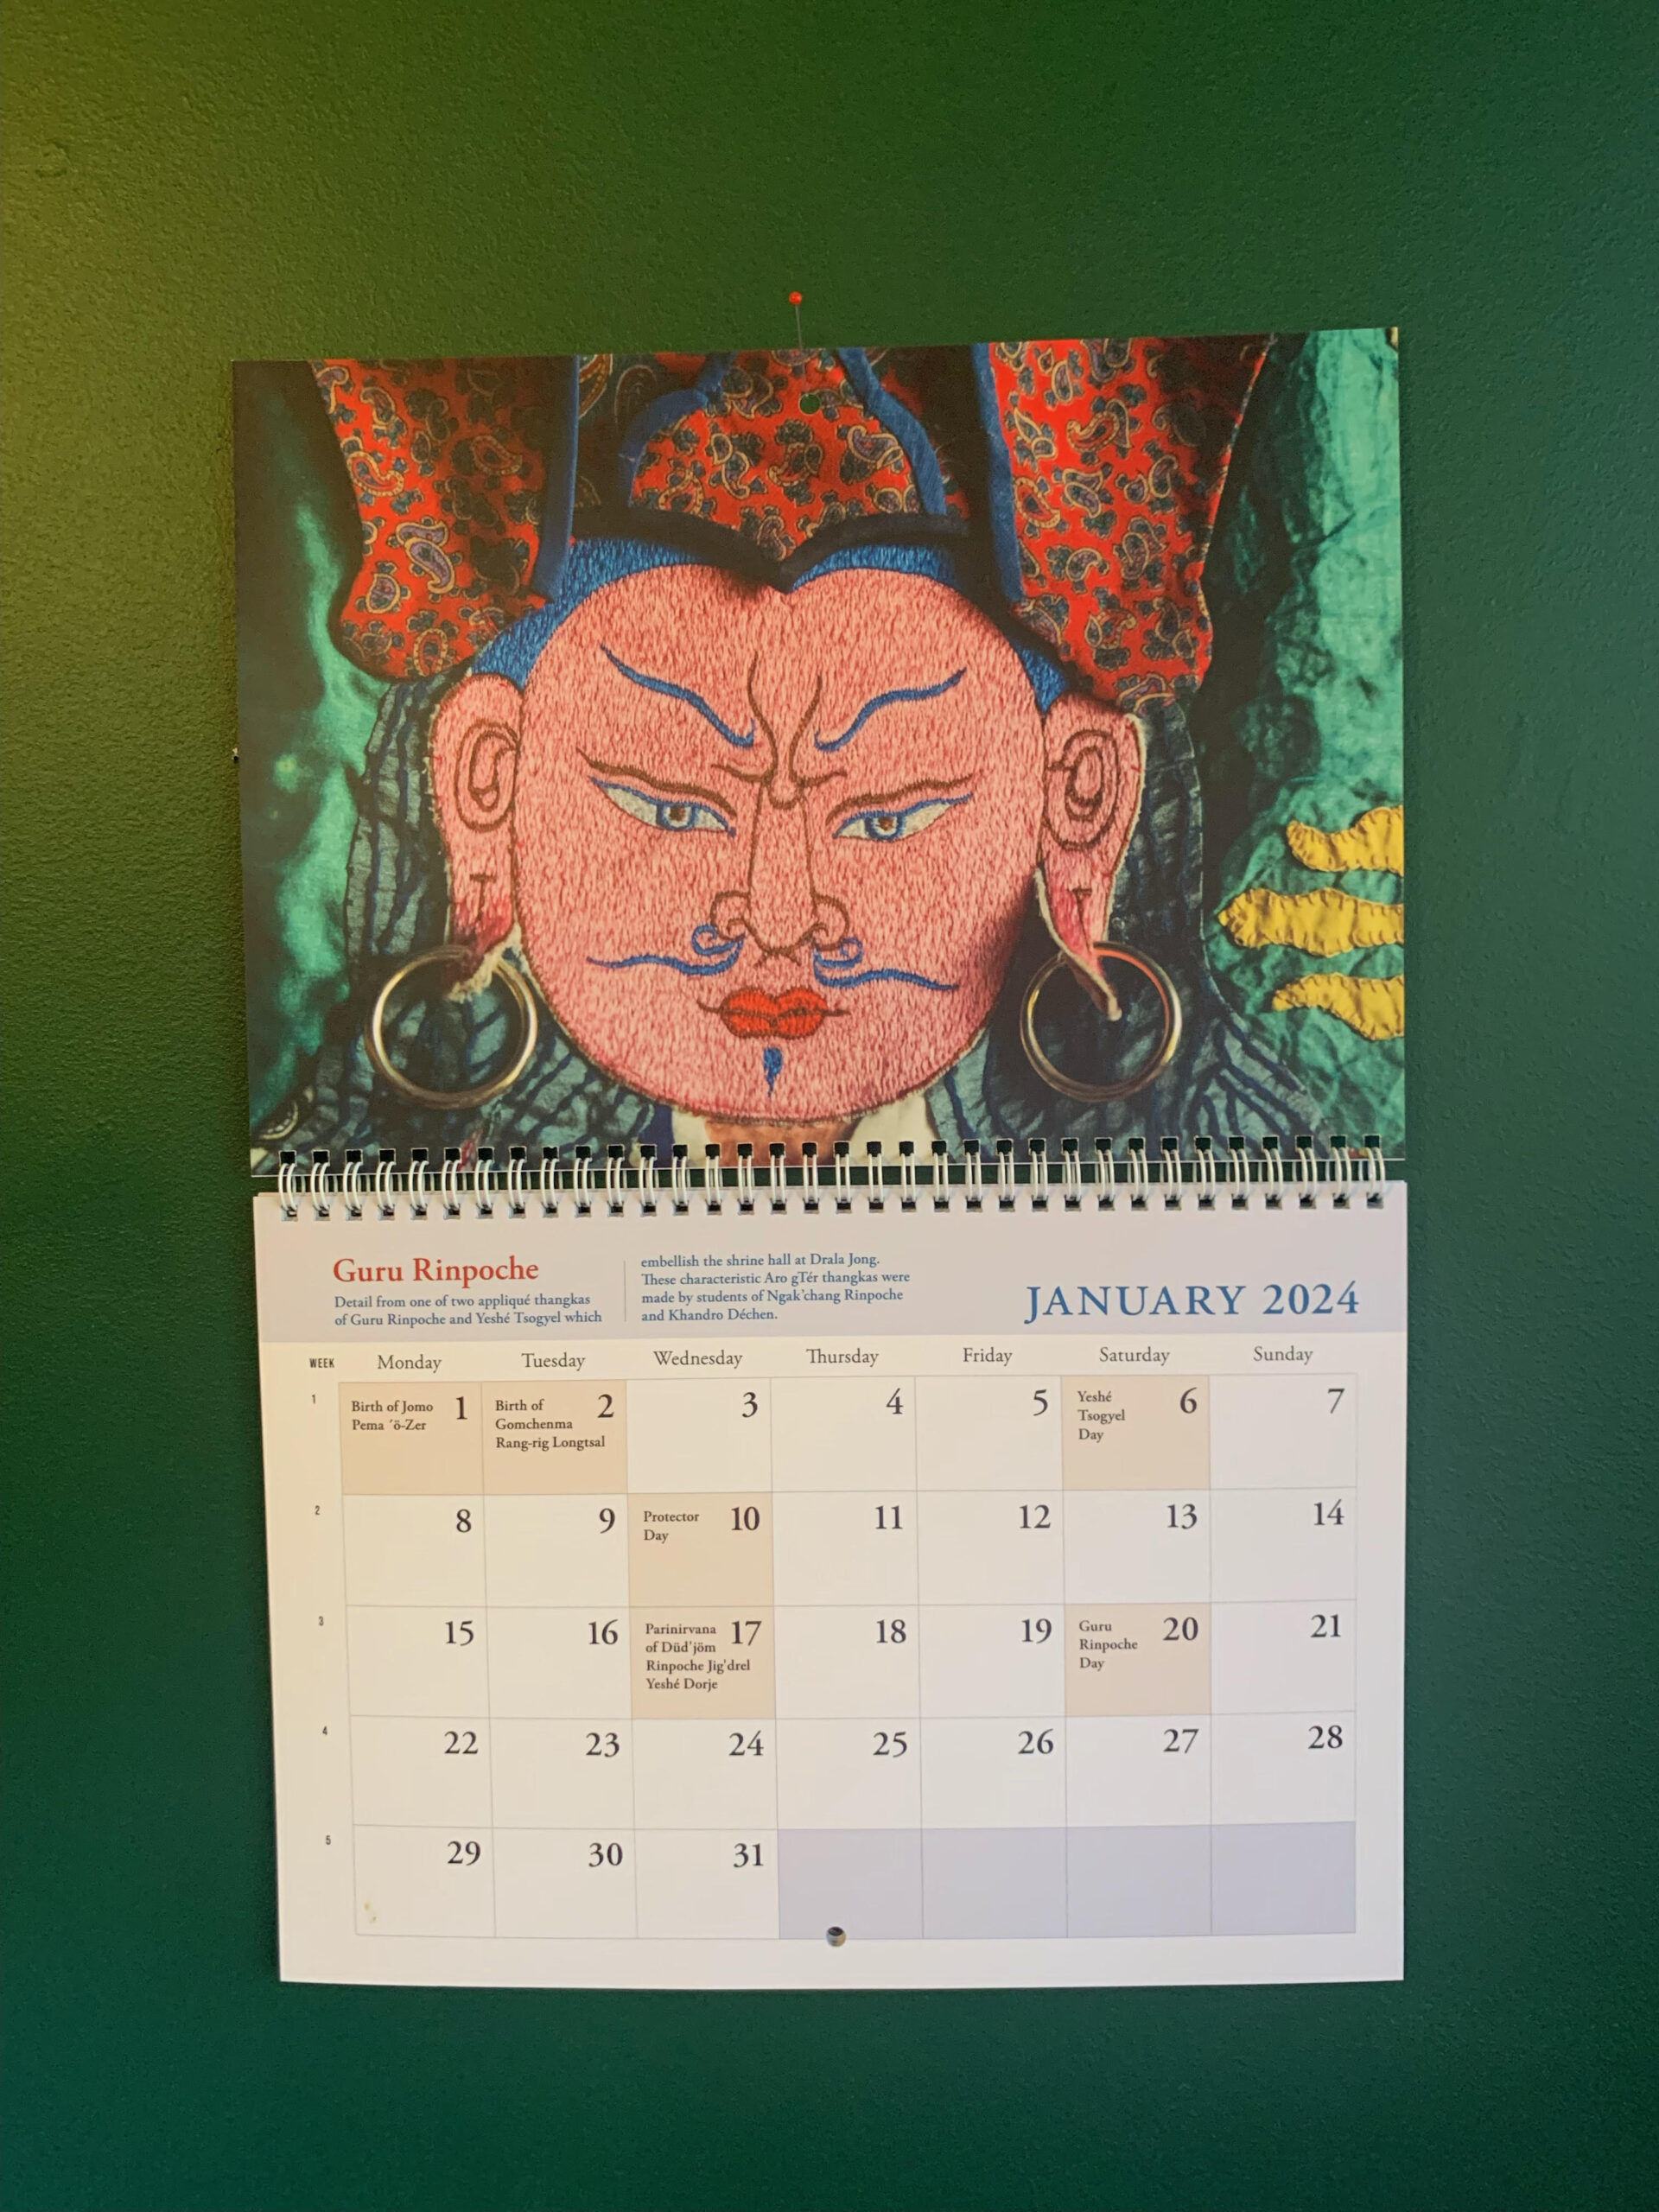 Drala Jong calendar